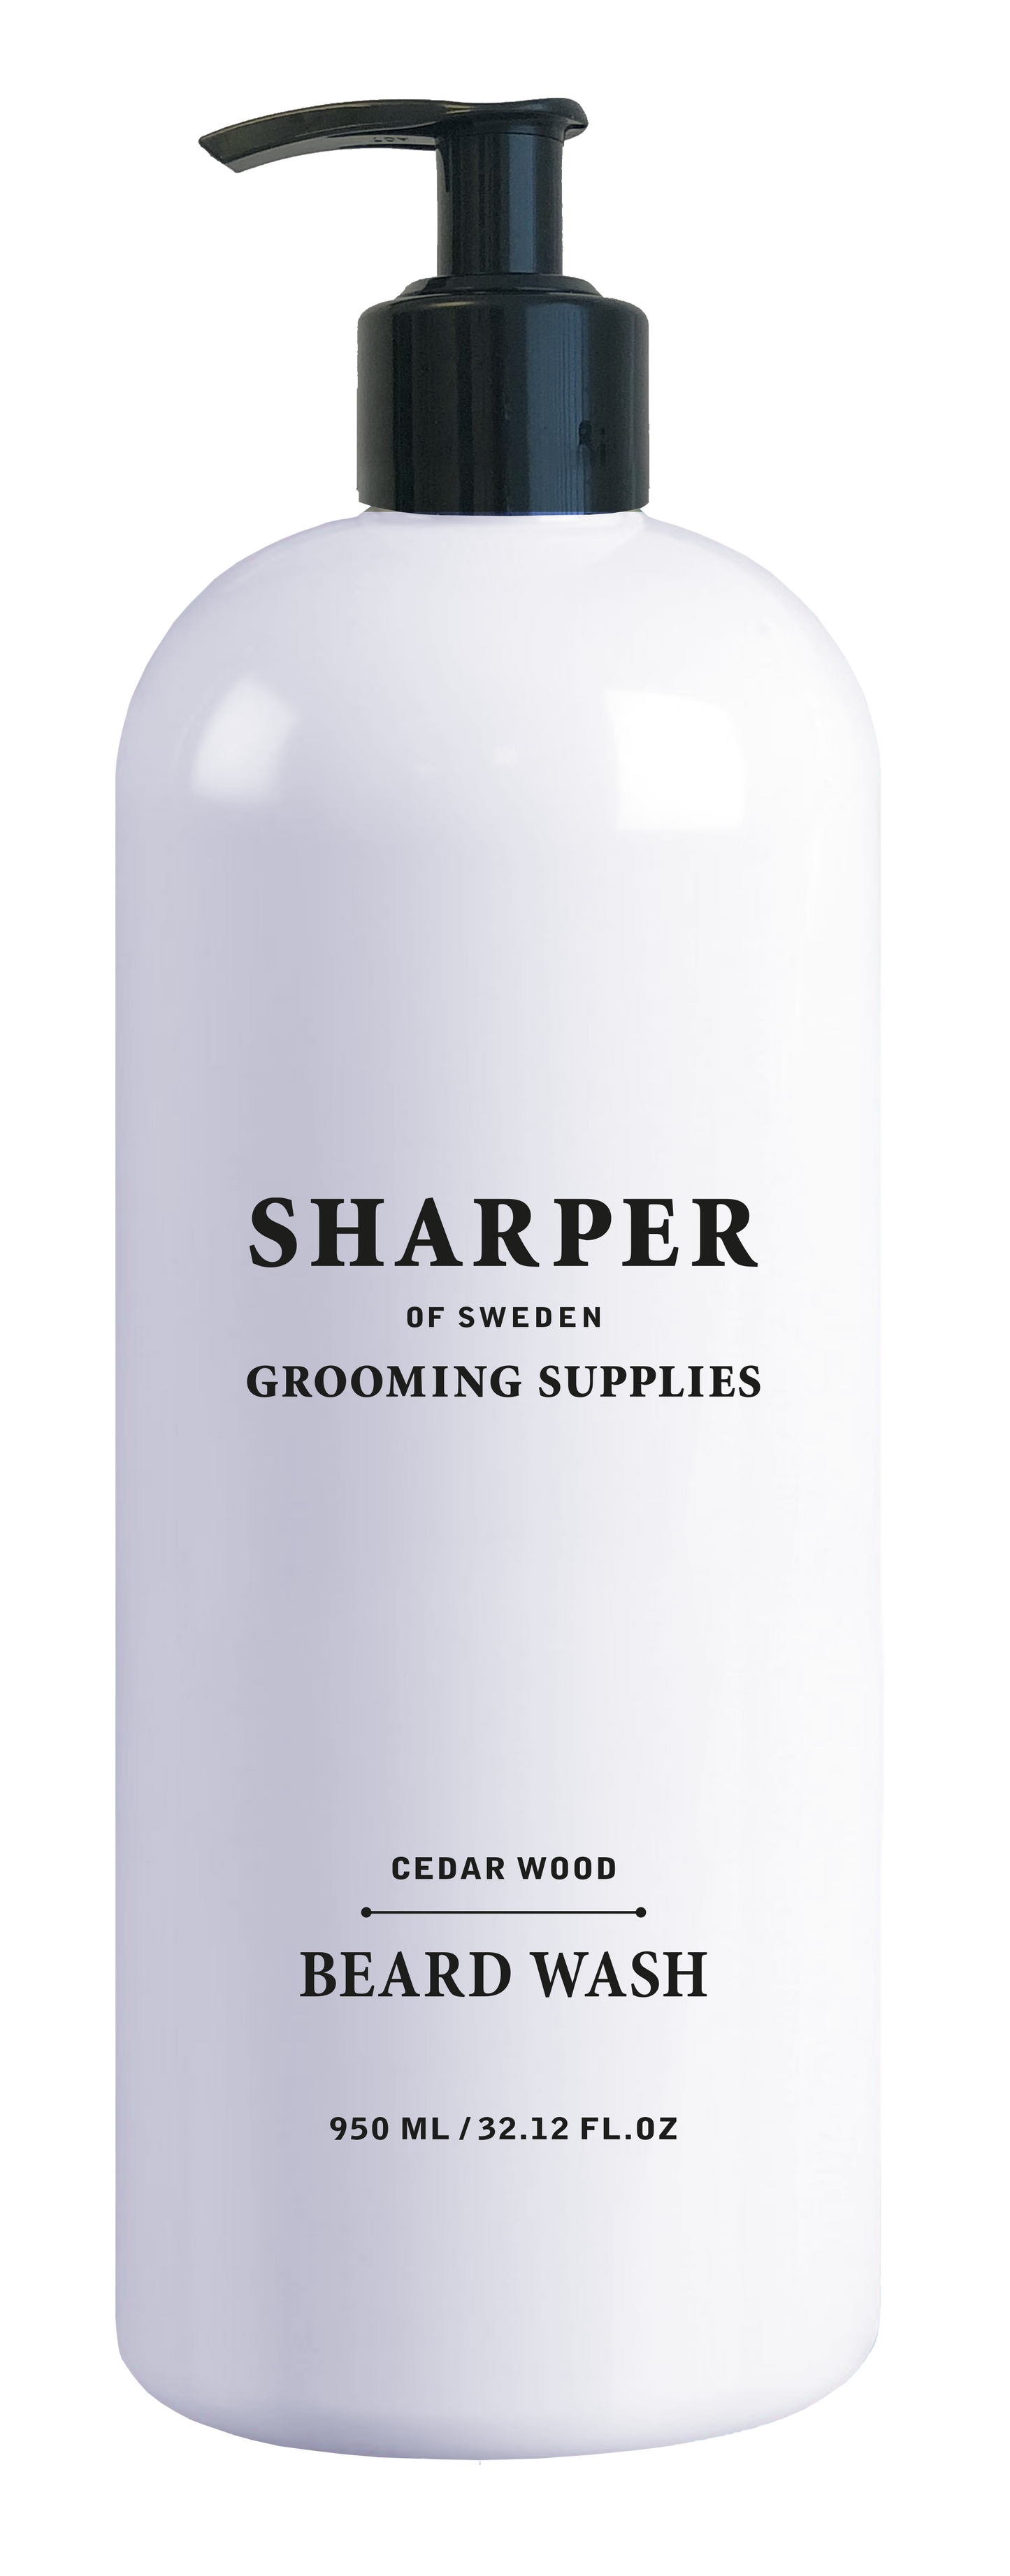 Sharper of Sweden Beard wash, Cedar wood 950ml